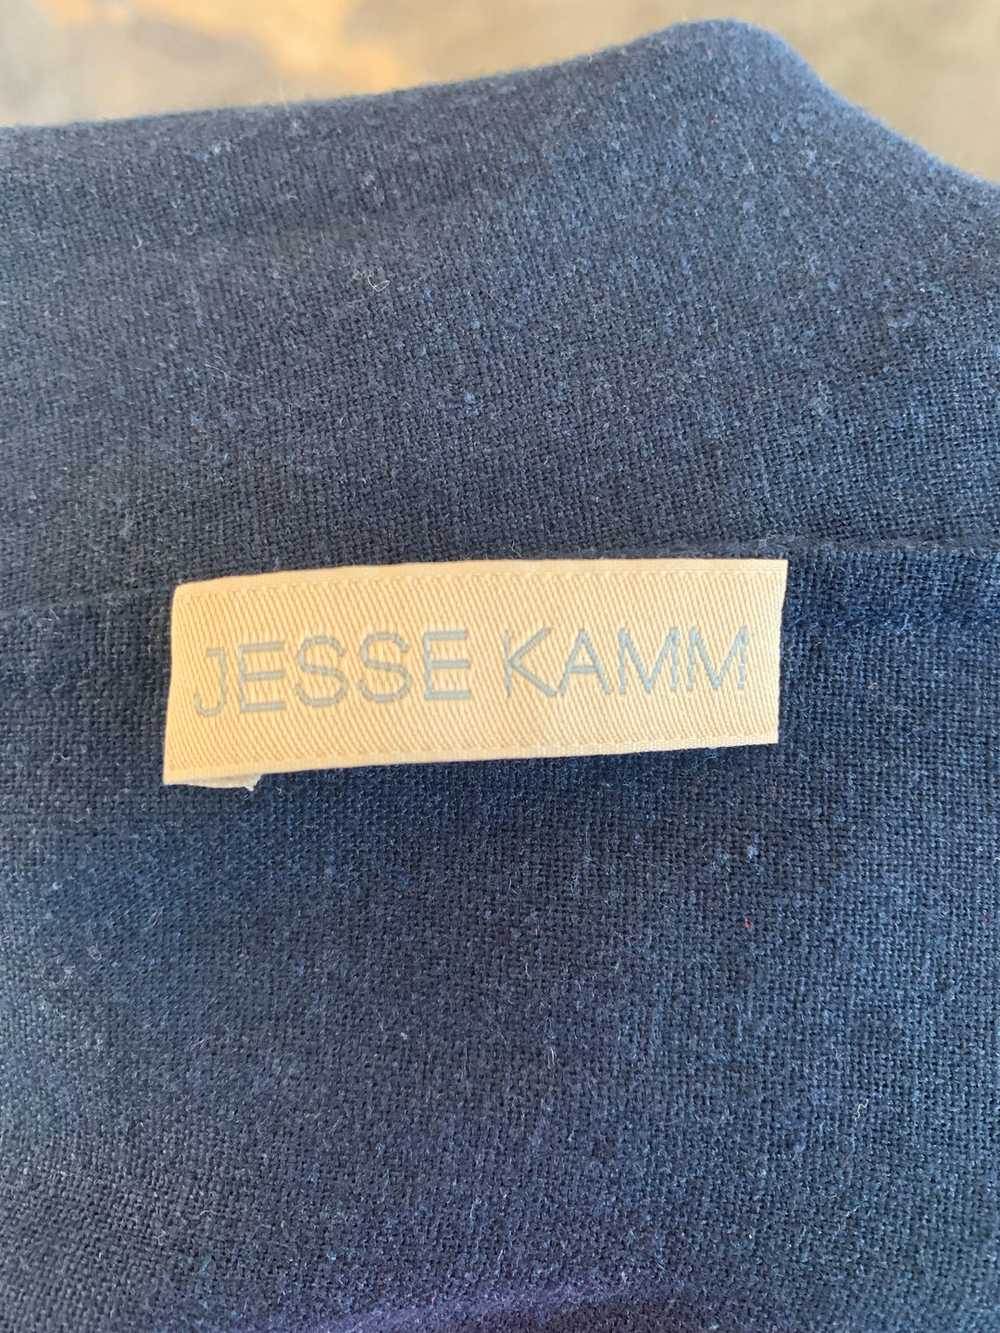 Jesse Kamm Raw Silk Sleeveless Jumpsuit - image 3